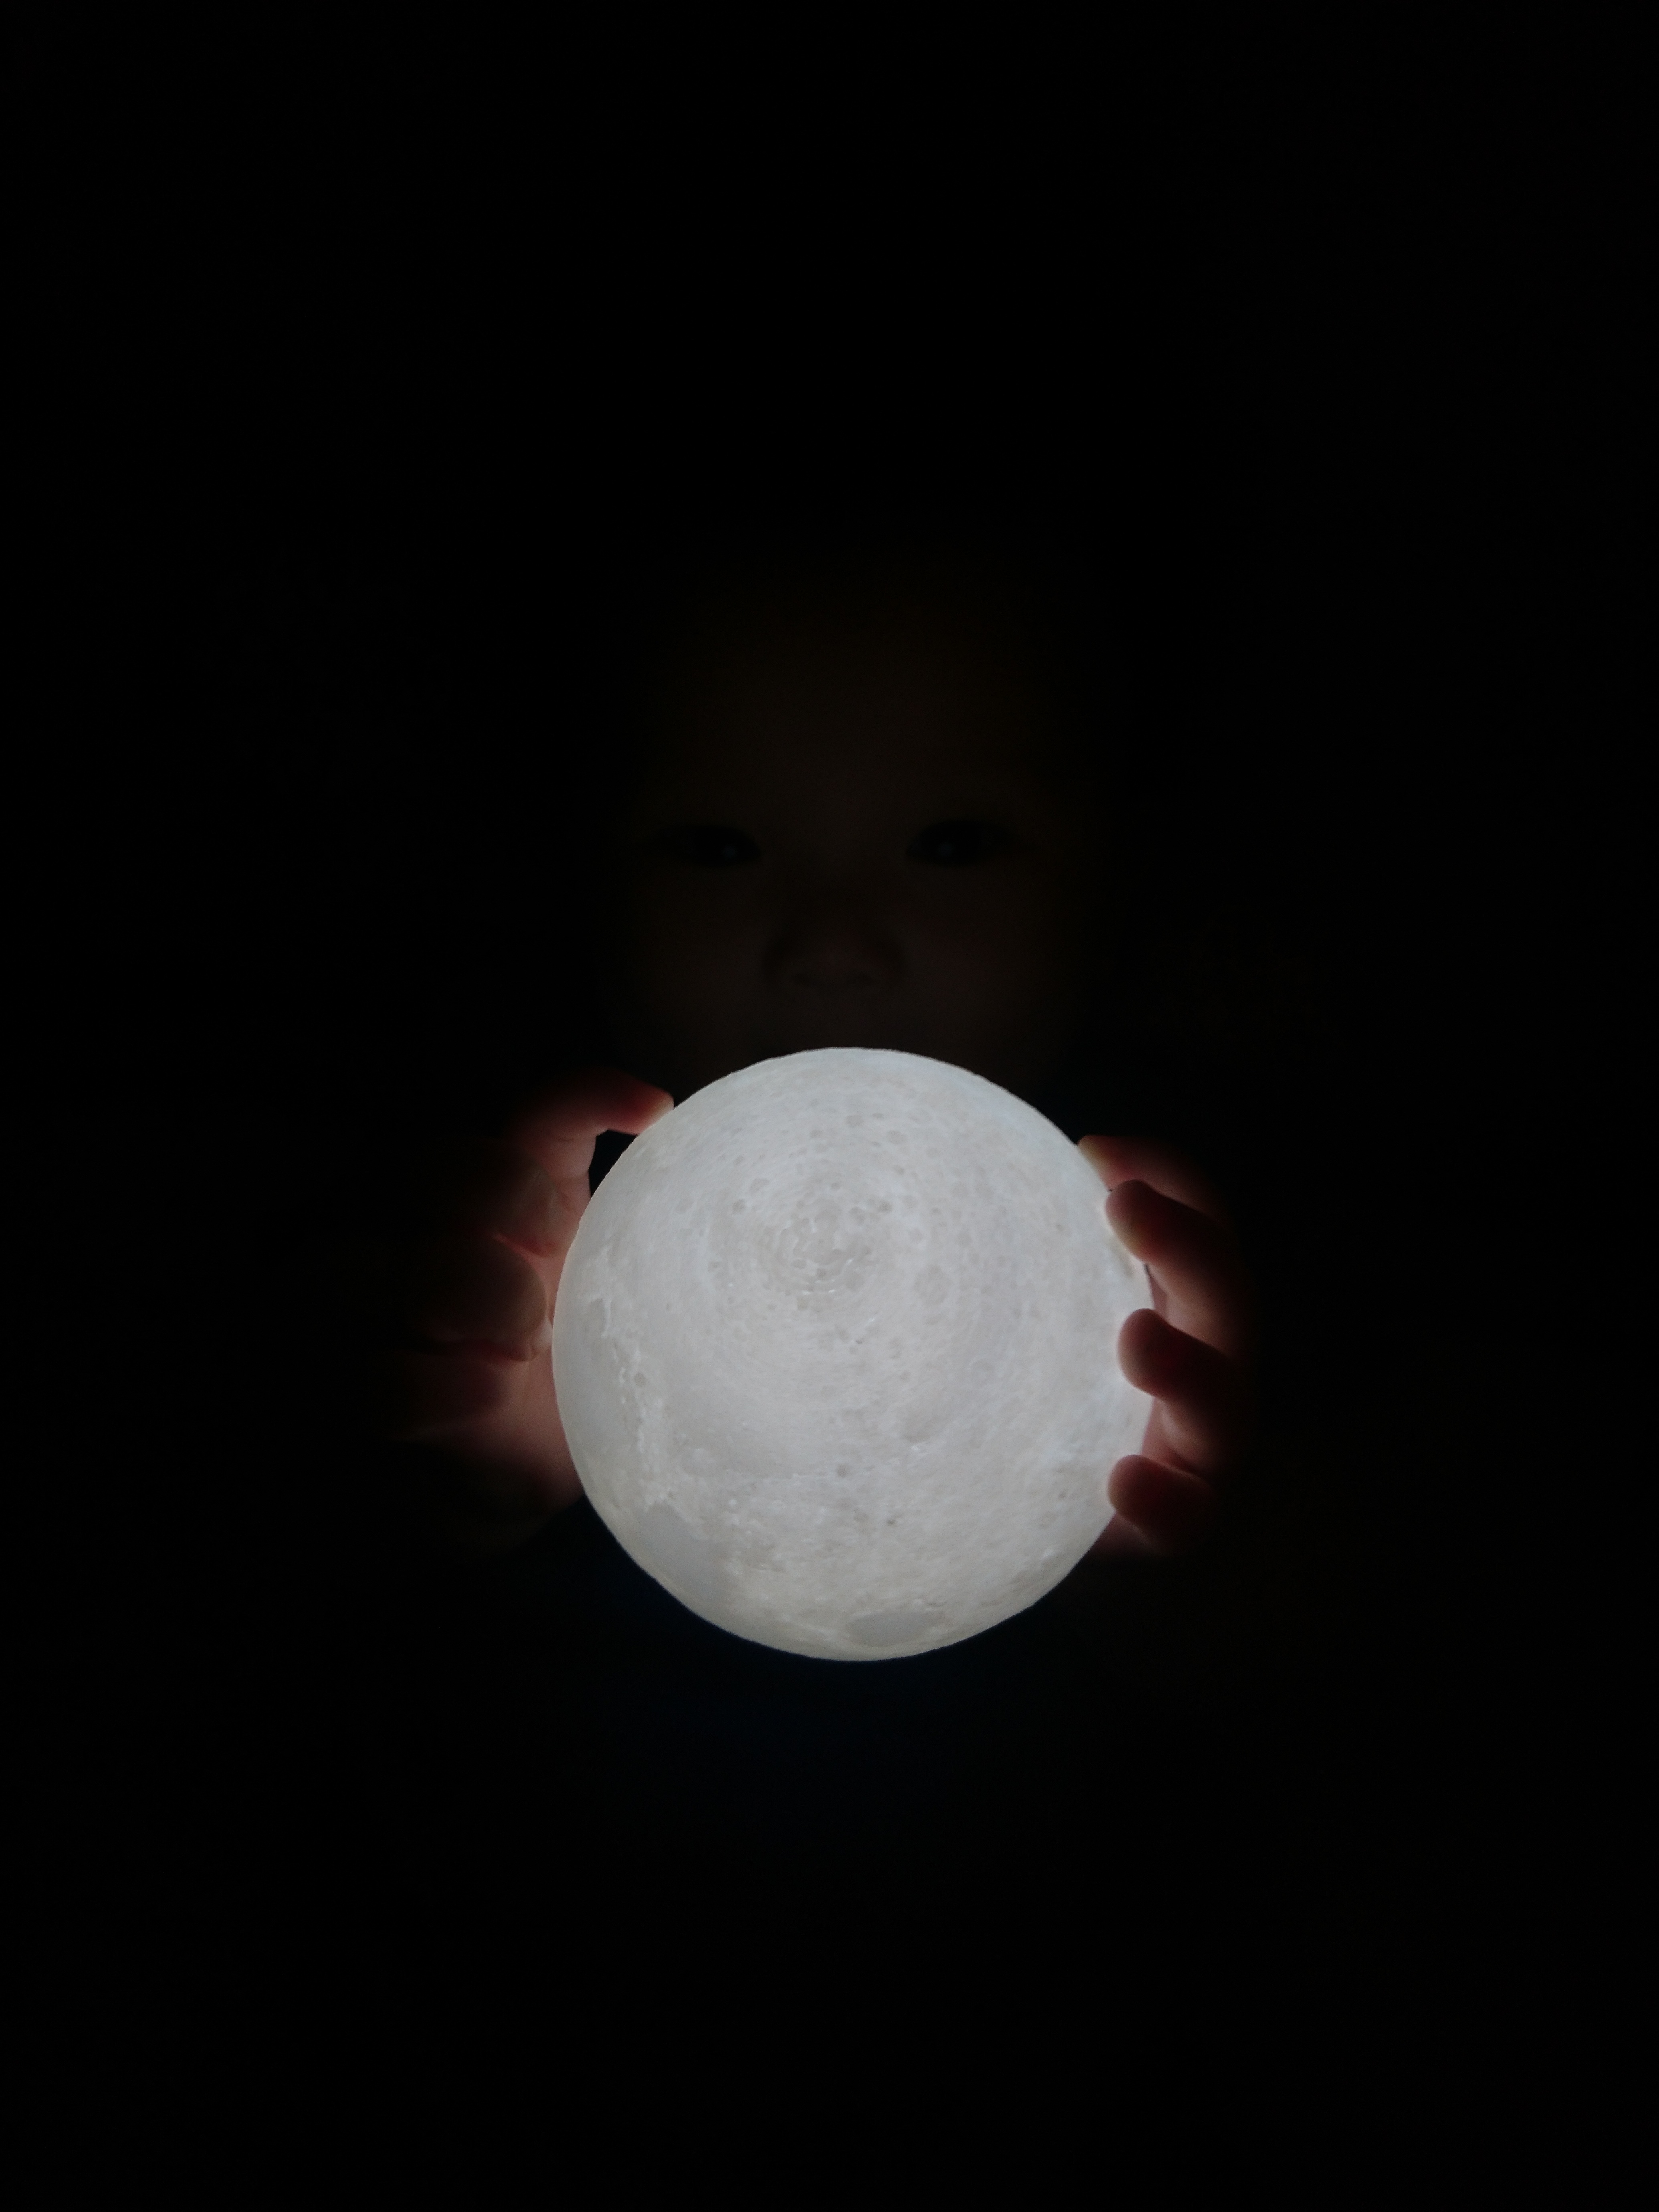 child, hands, glow, dark, moon, ball